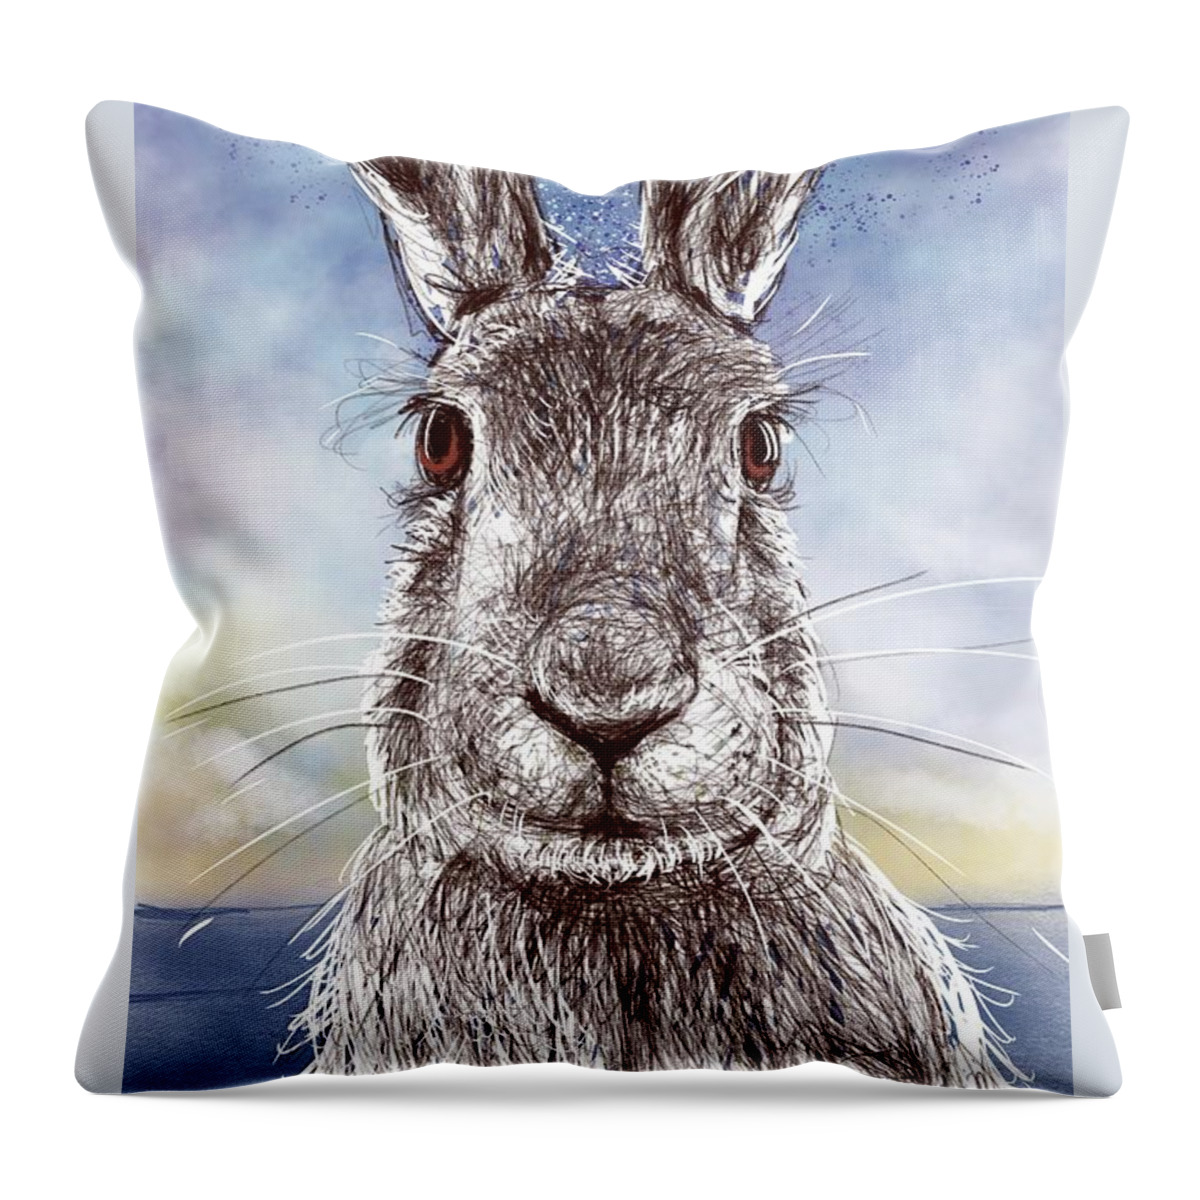 Bunny Throw Pillow featuring the digital art Mr. Rabbit by AnneMarie Welsh